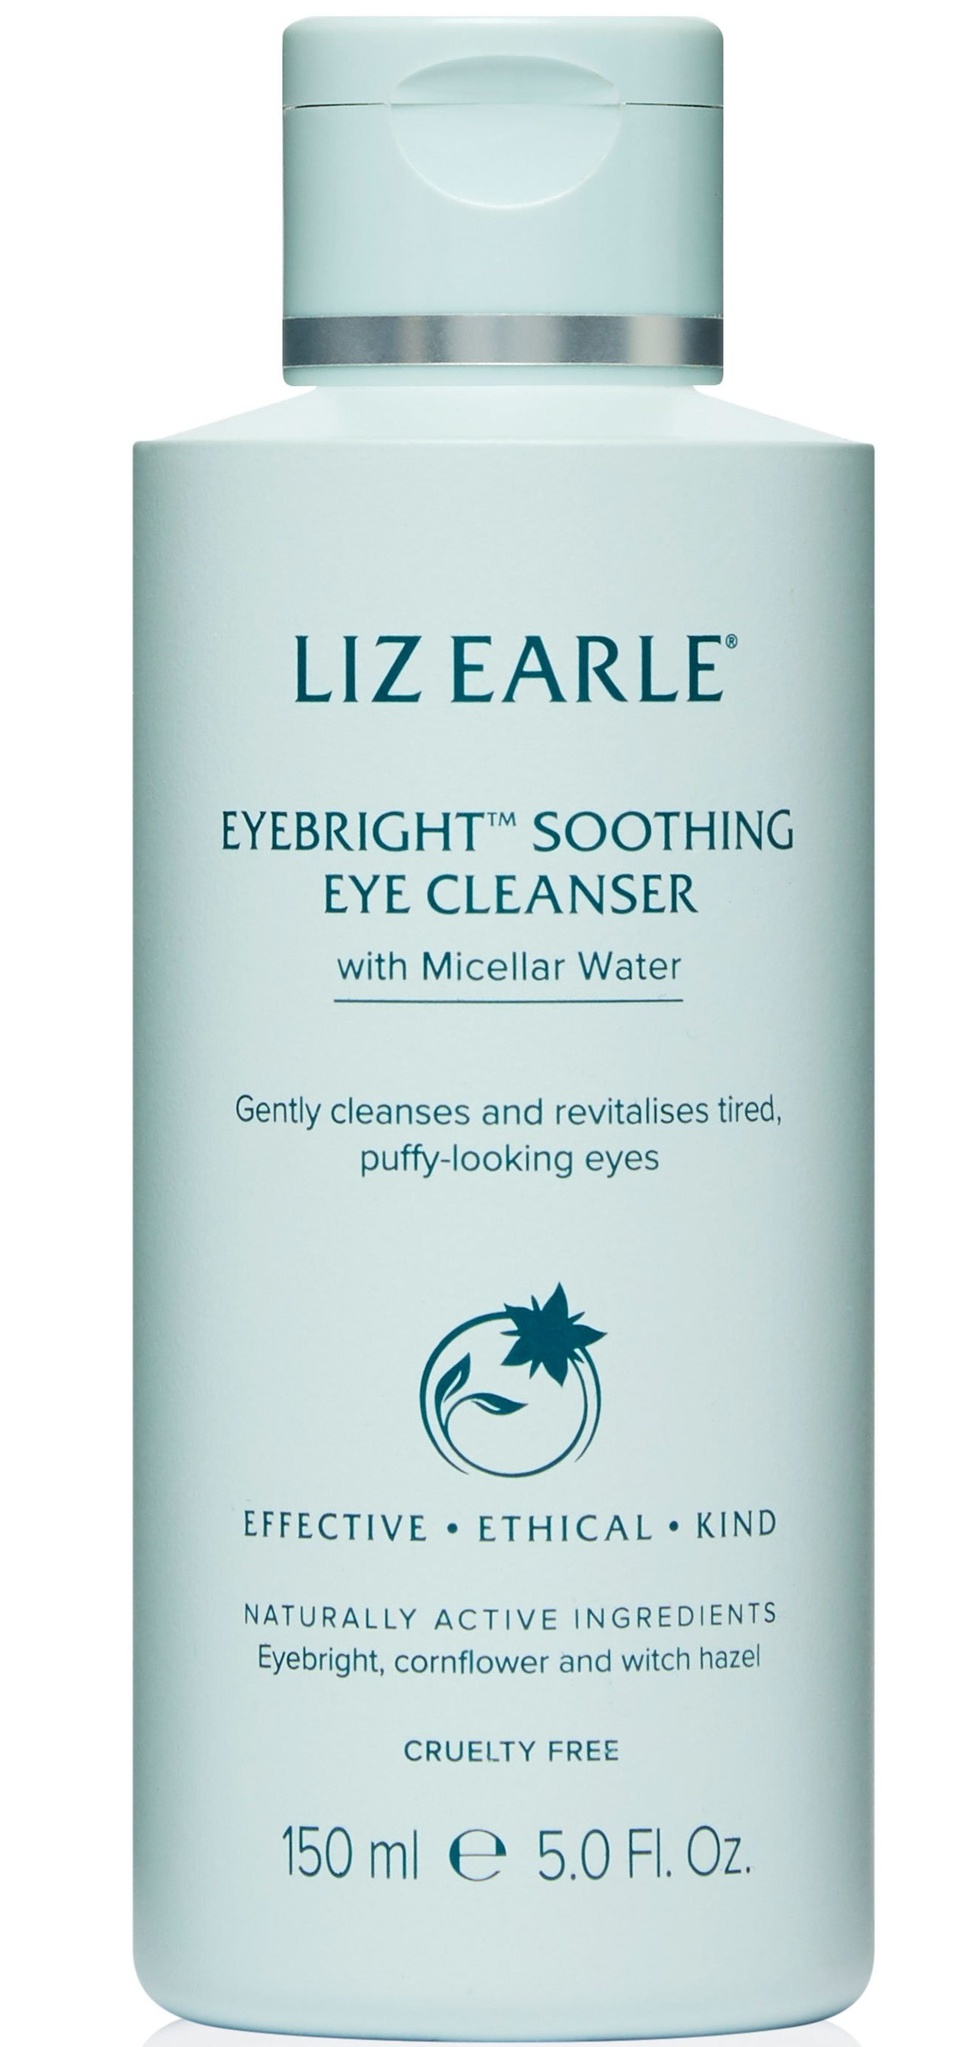 Liz Earle Eyebright™ Soothing Eye Cleanser